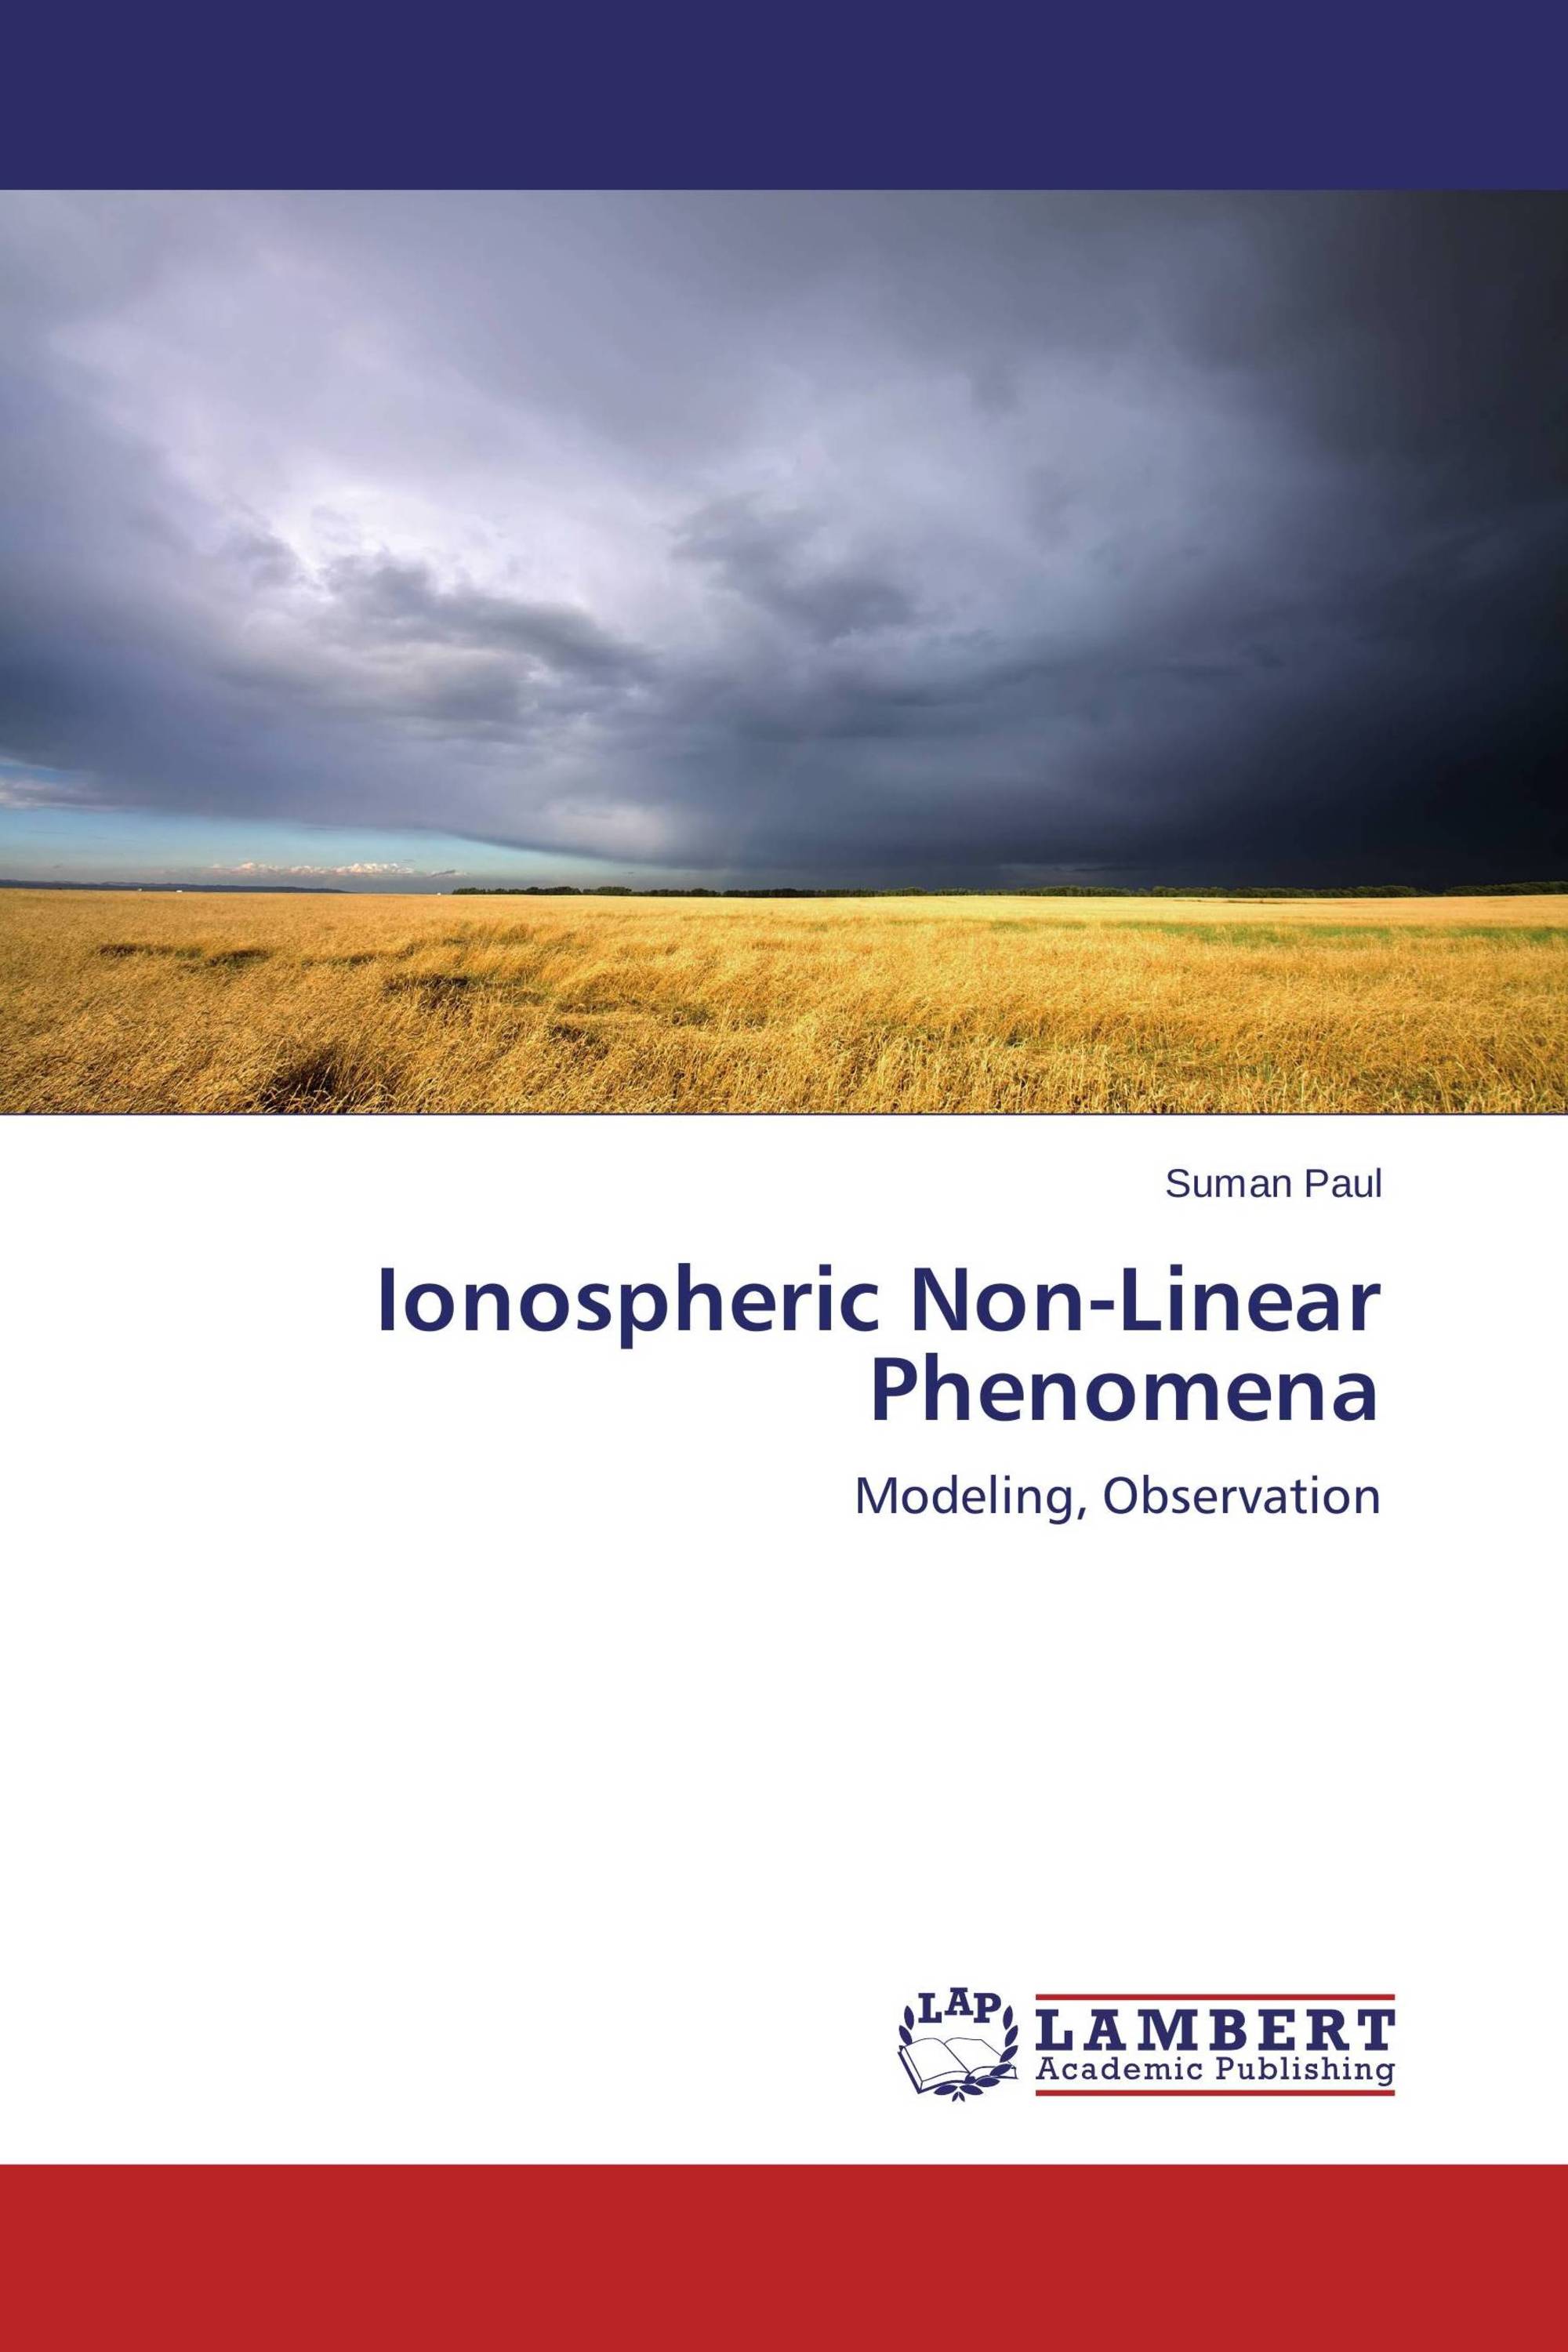 Dissertation gps ionosphere